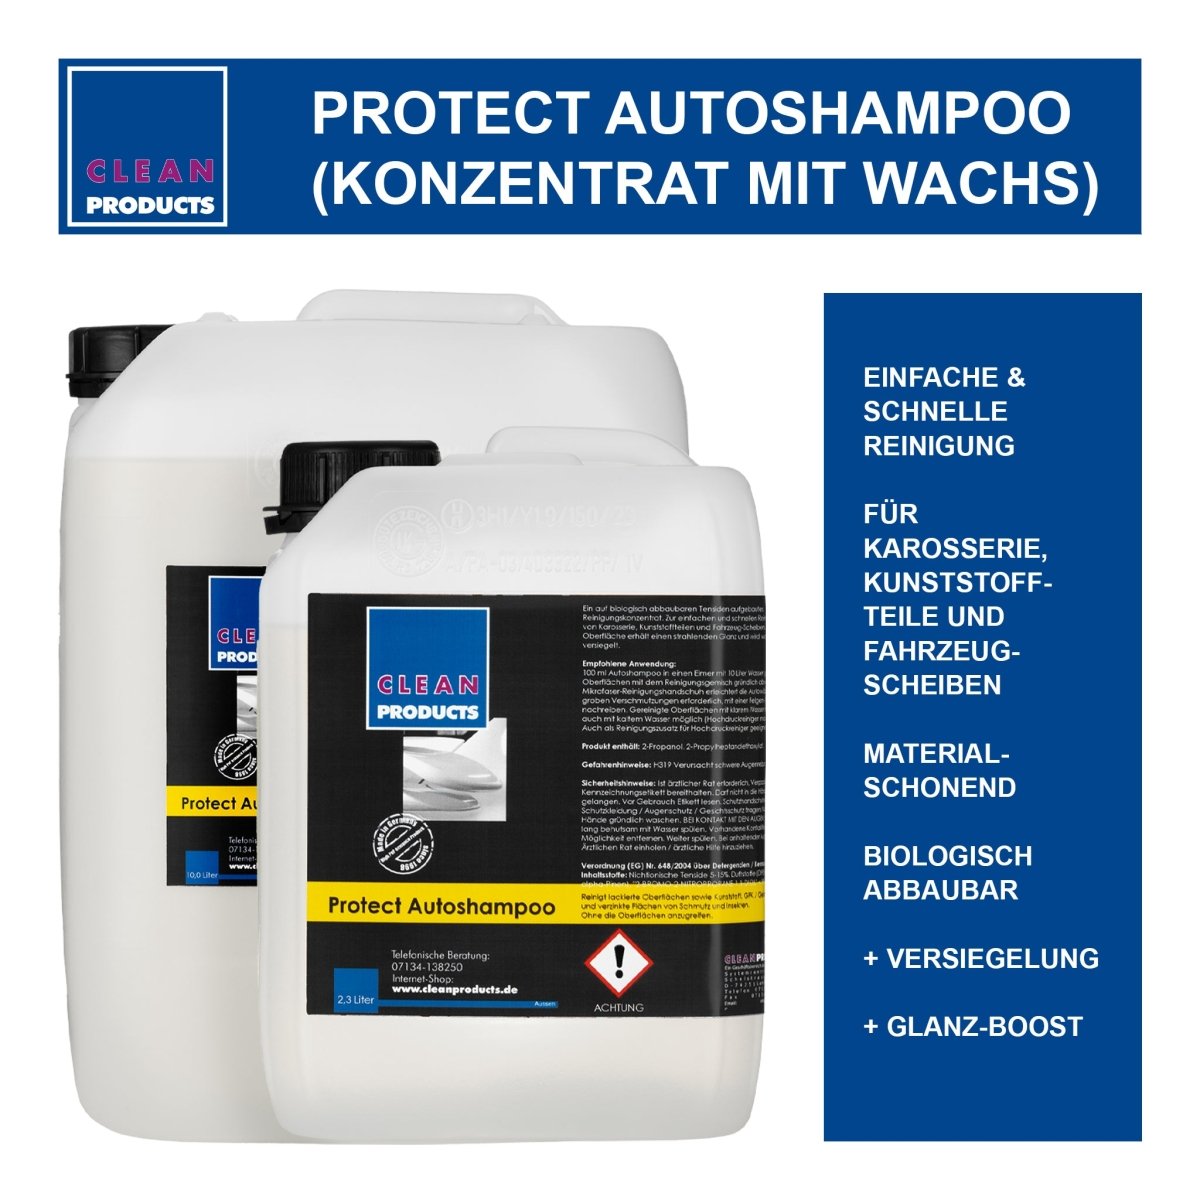 Protect Autoshampoo (Konzentrat mit Wachs) - 4,8 Liter - CLEANPRODUCTS